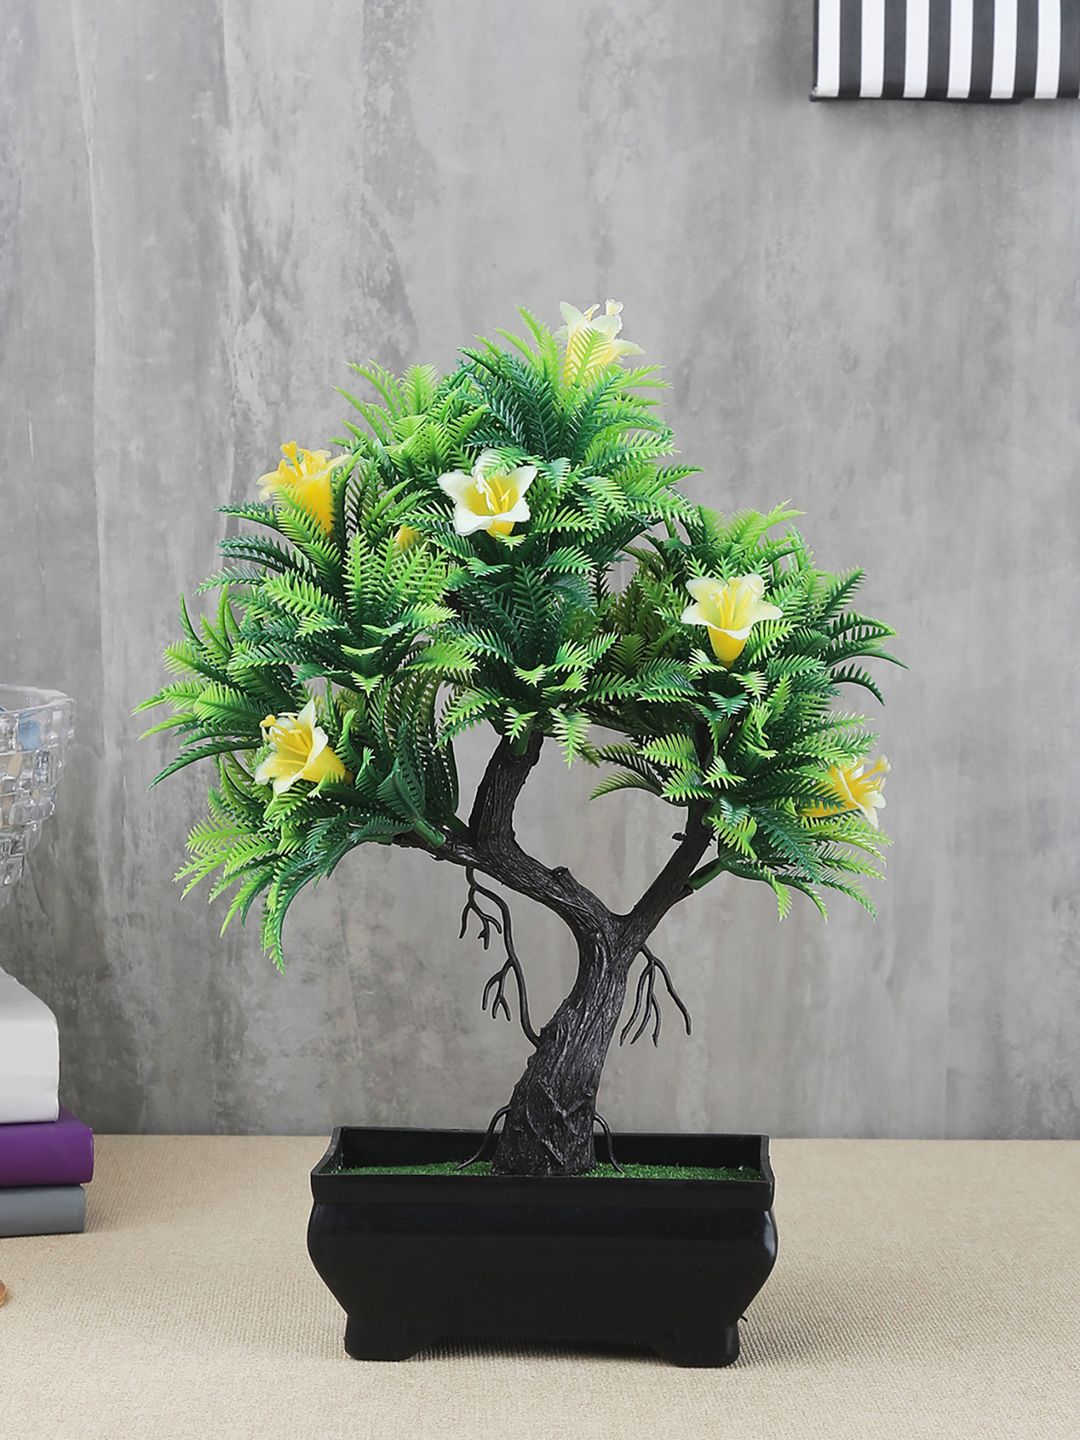 FOLIYAJ Green & Yellow Artificial Y Shaped Bonsai Tree With Fern Leaves Flowers & Black Pot Price in India